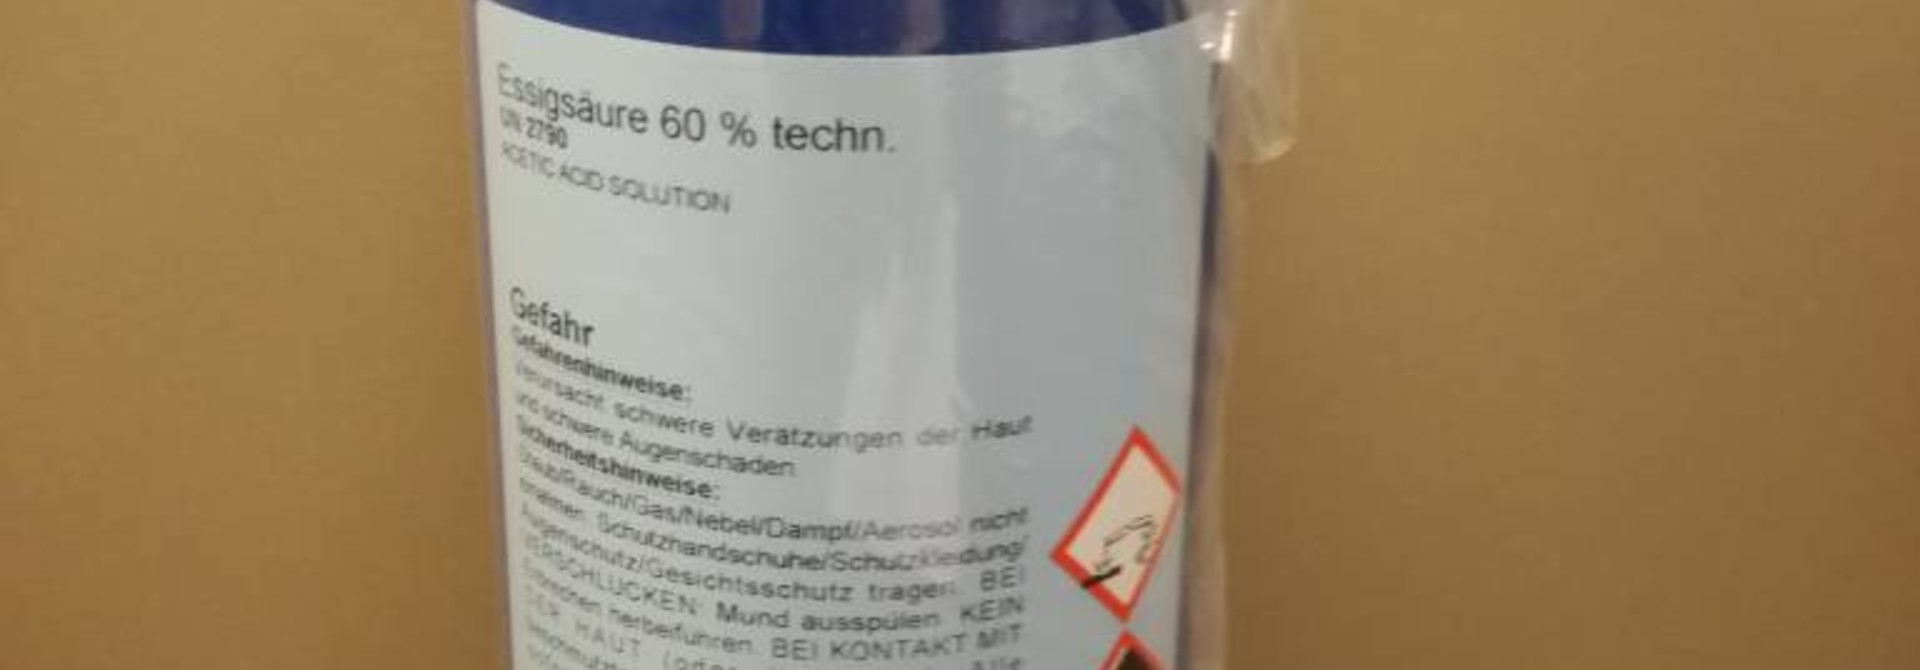 Acetic acid - 1 liter